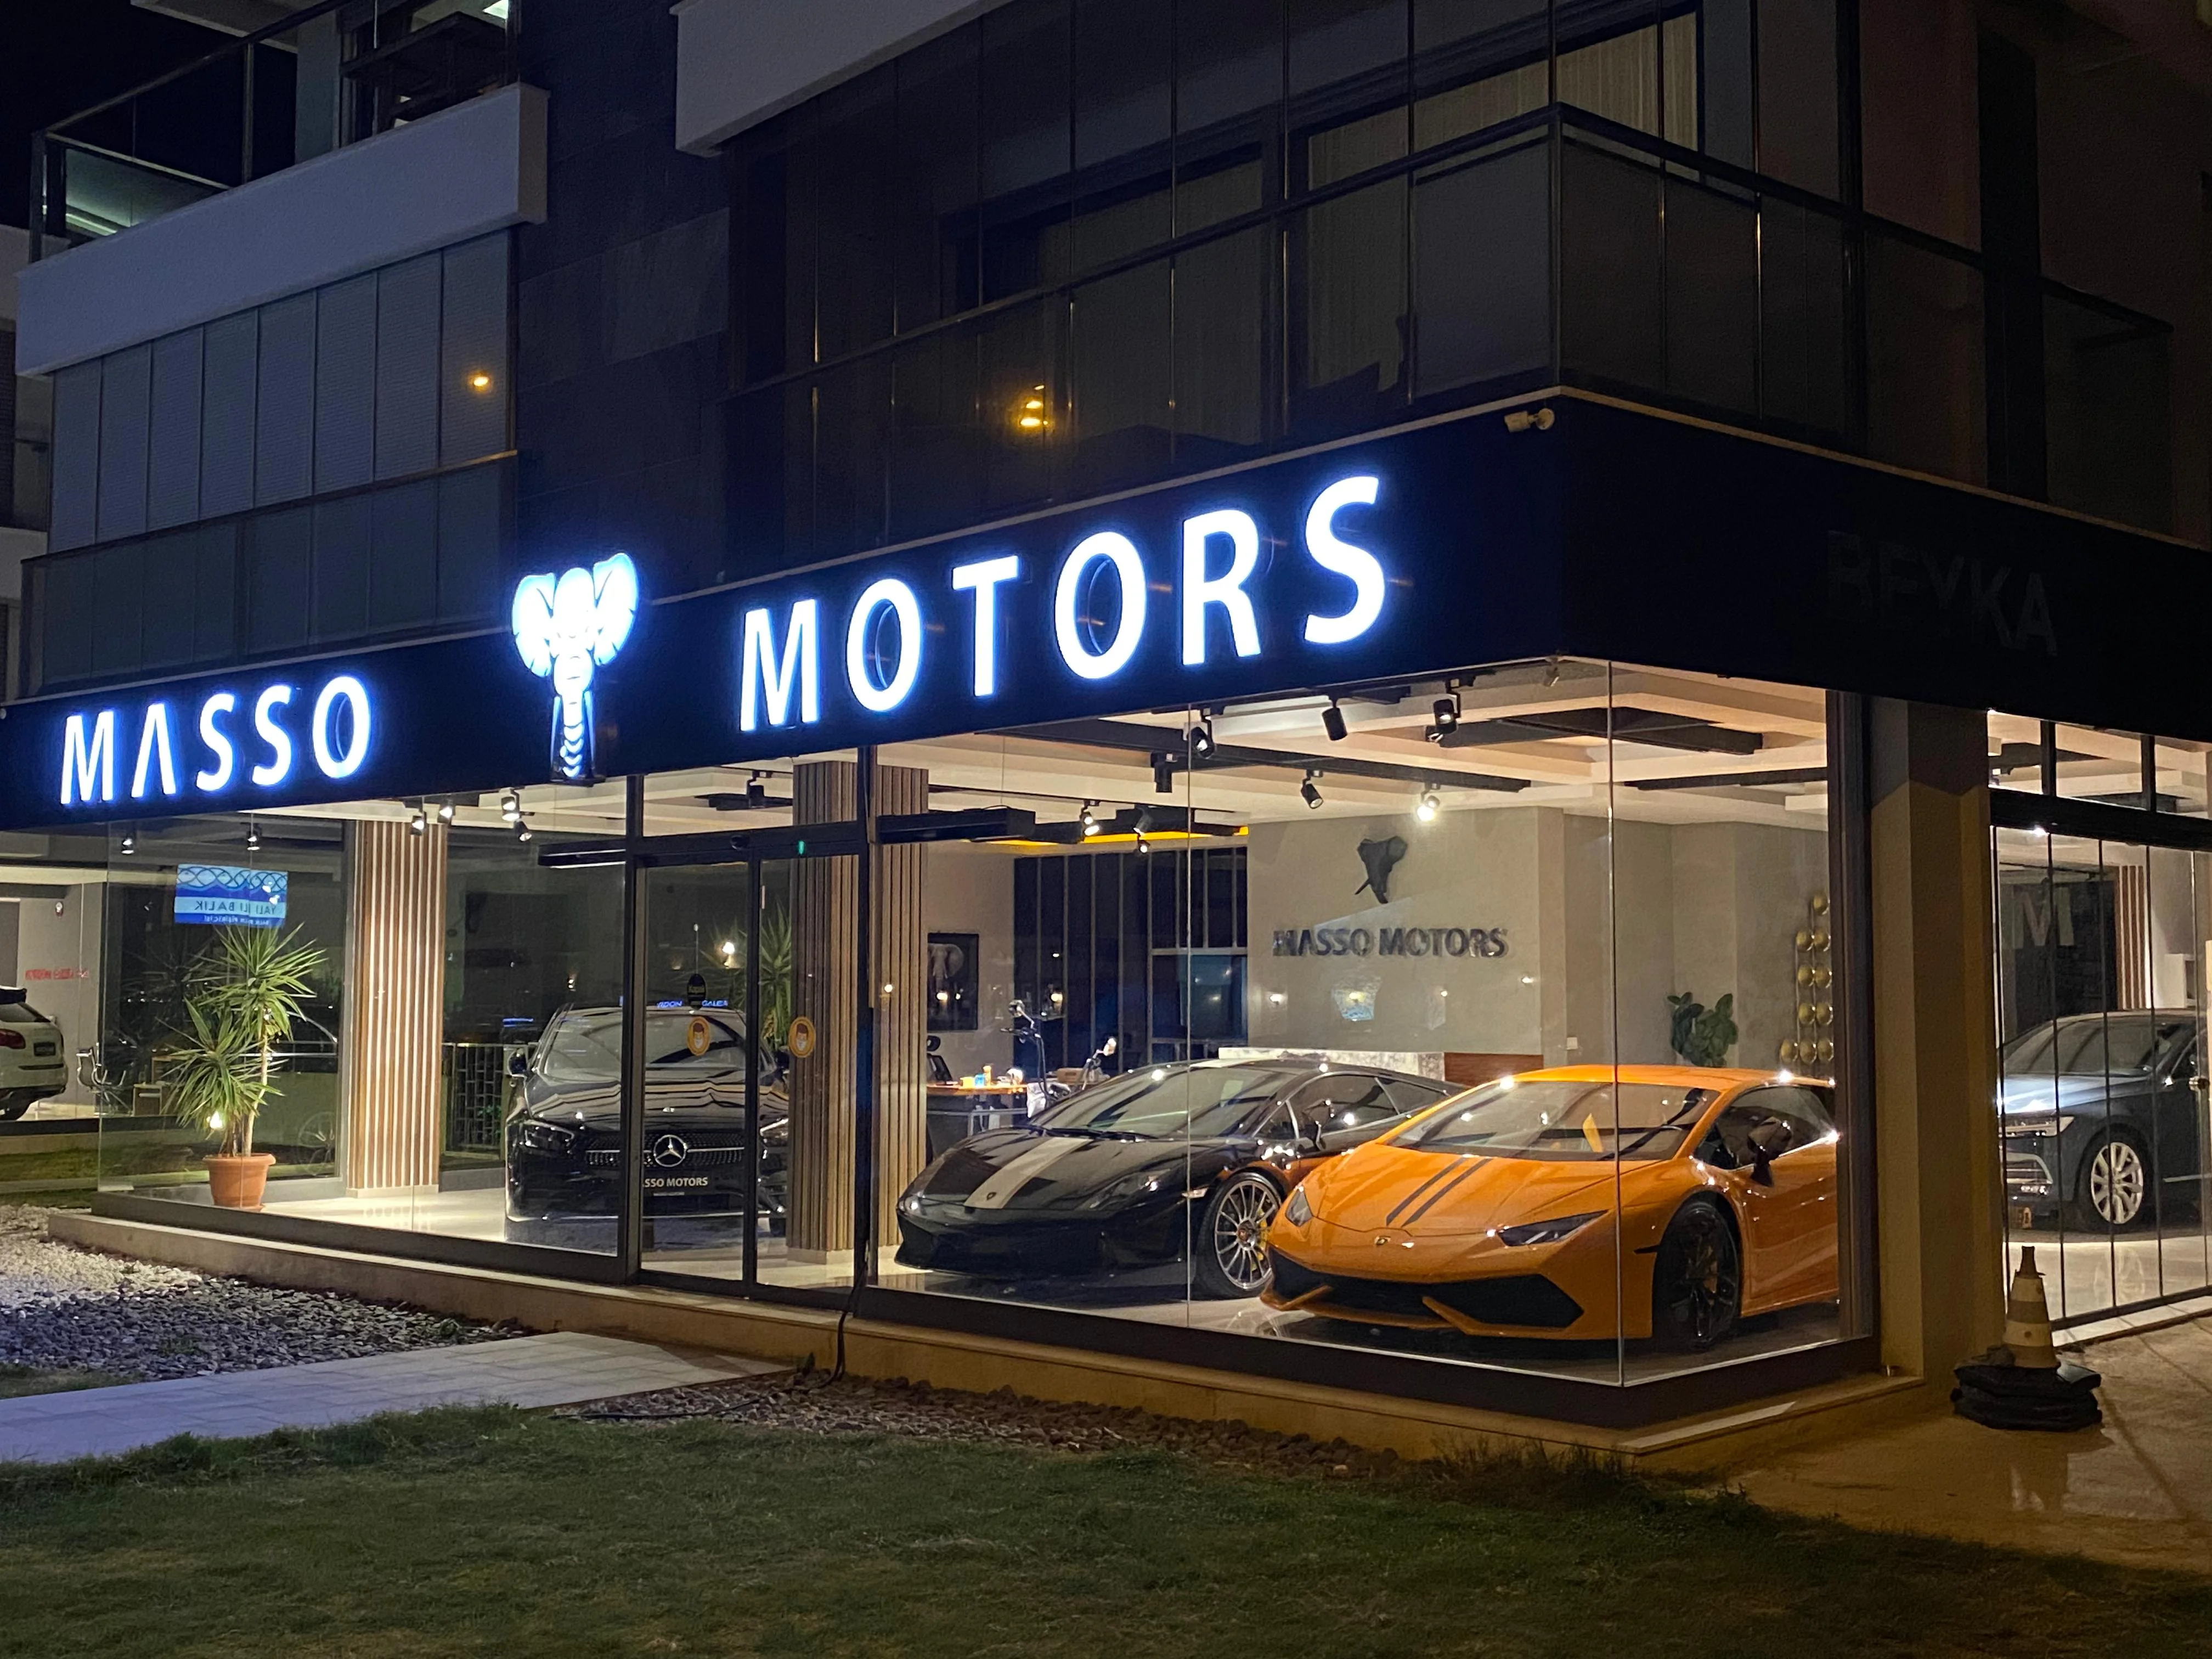 Masso Motors